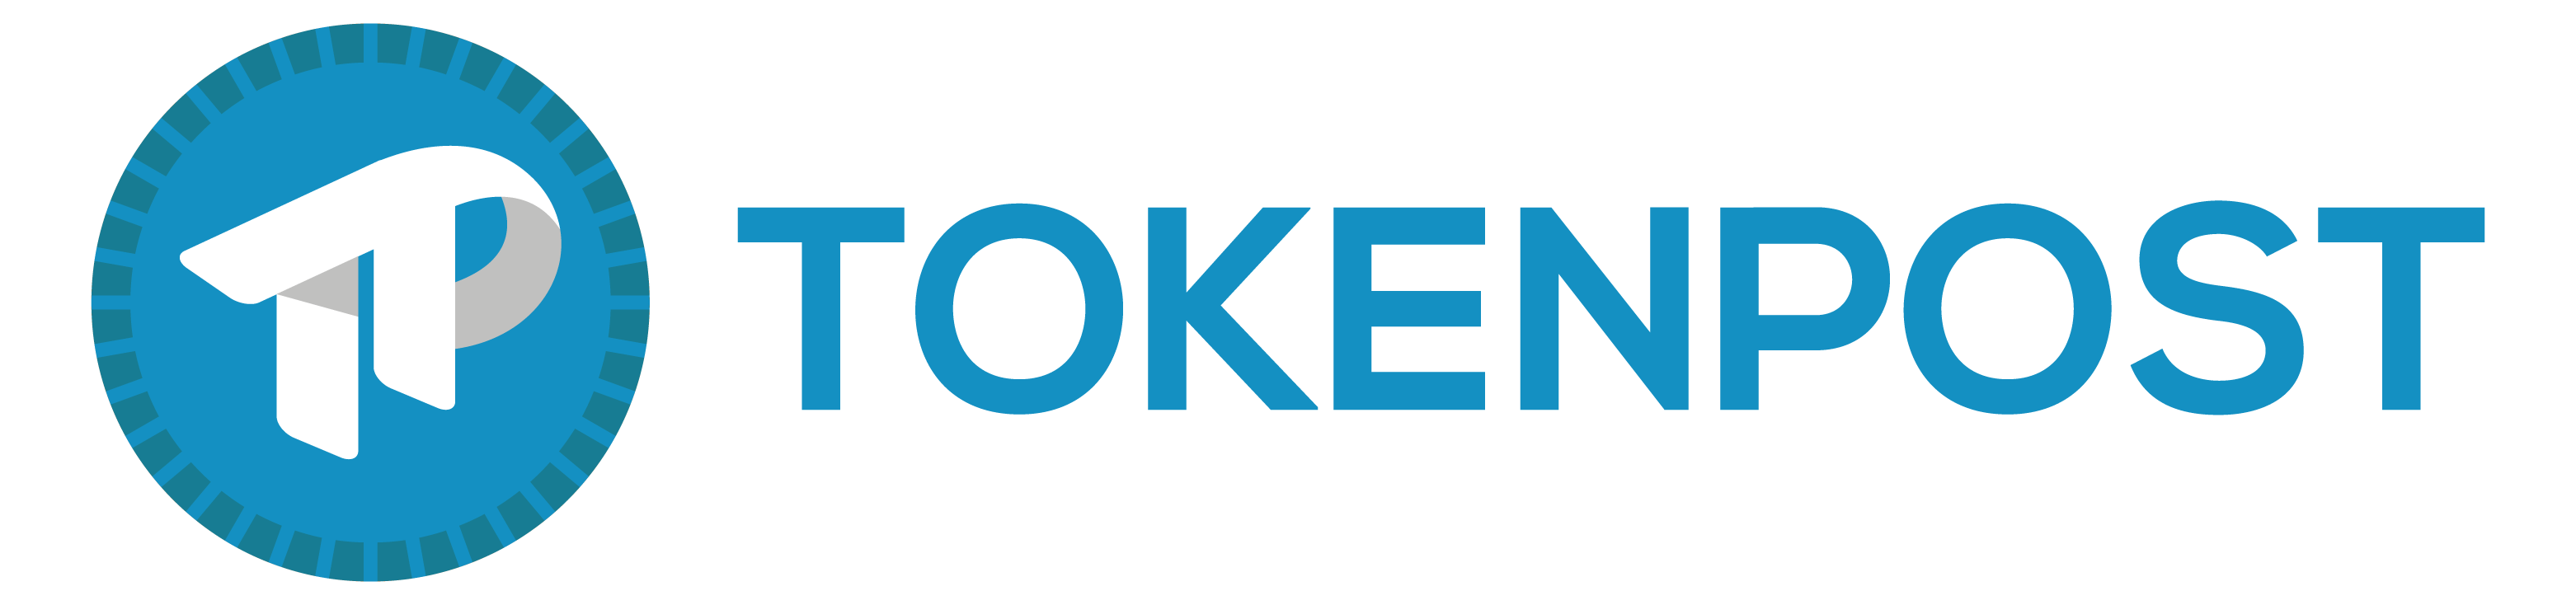 tokenpost-logo.png